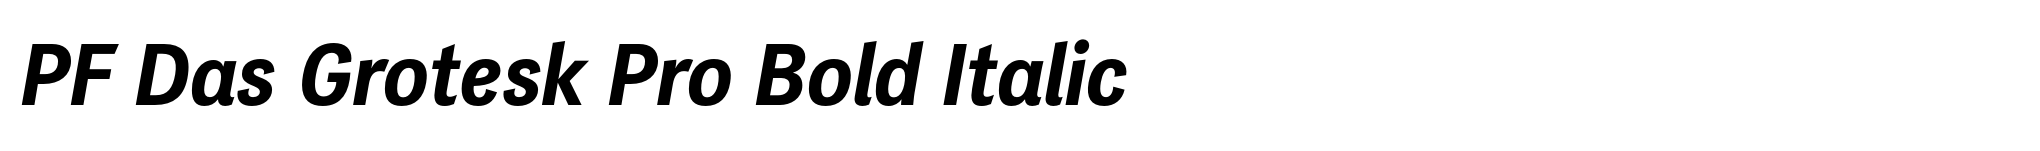 PF Das Grotesk Pro Bold Italic image